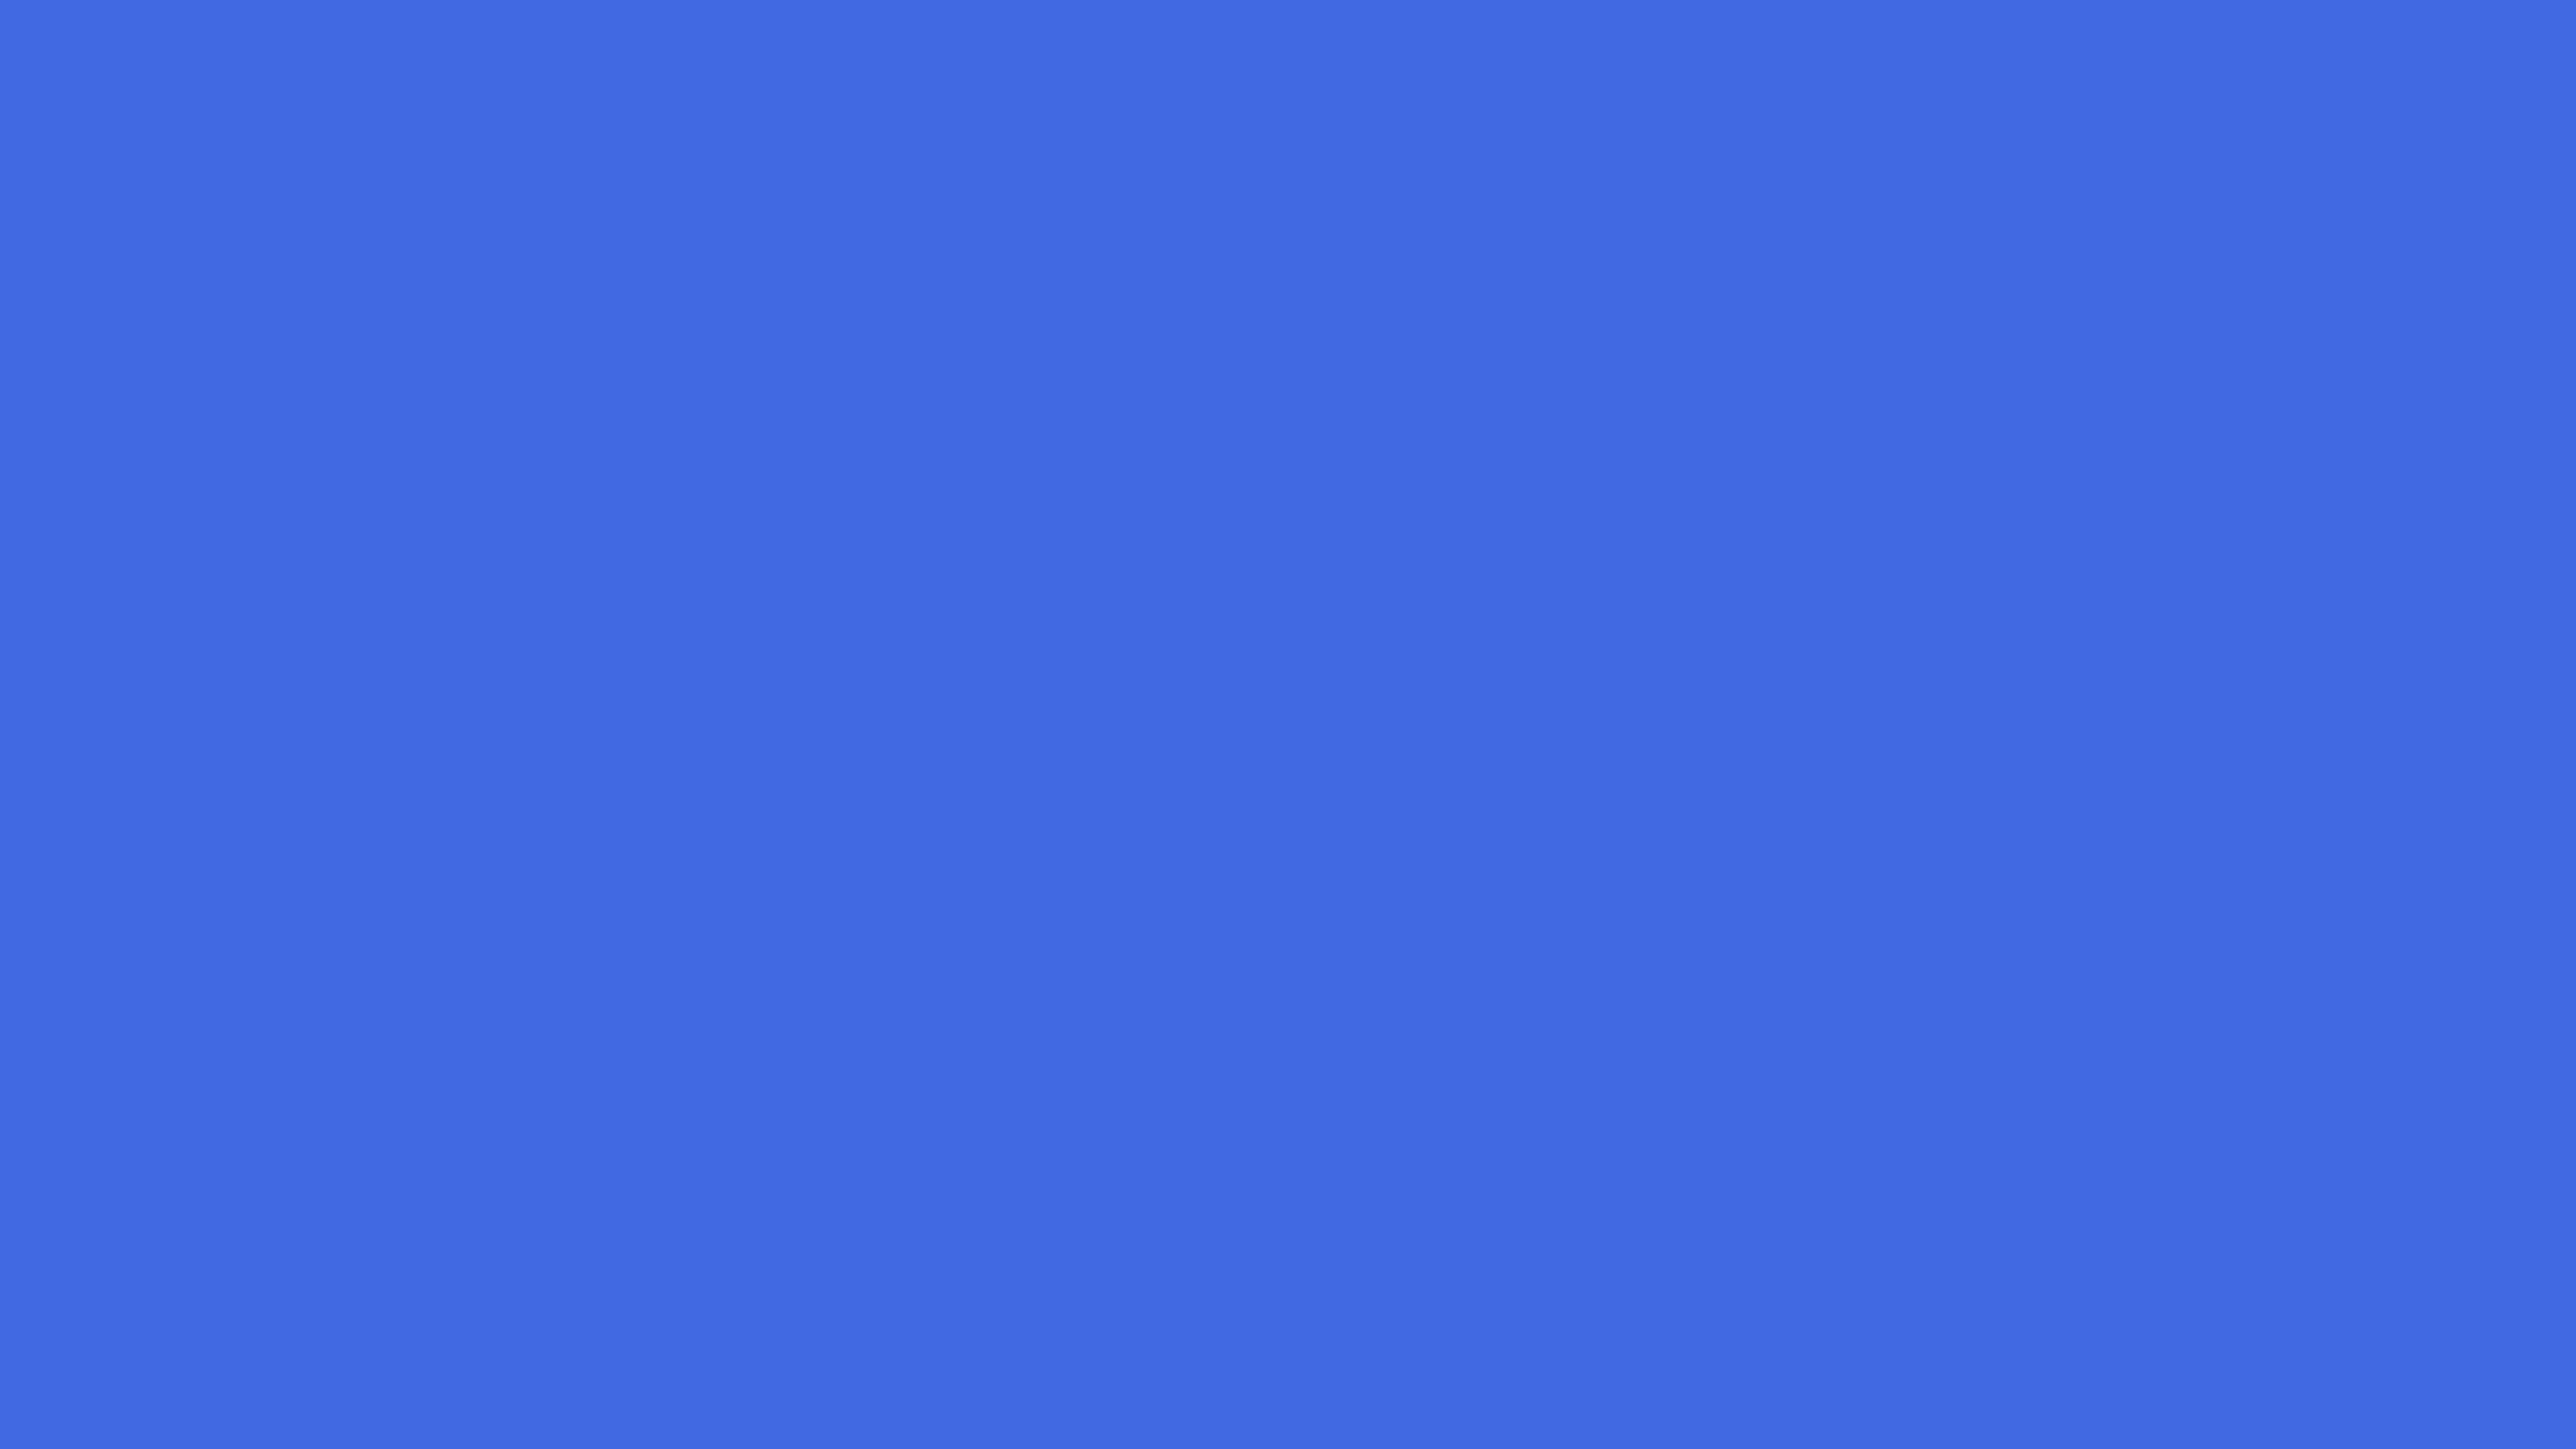 7680x4320 Royal Blue Web Solid Color Background